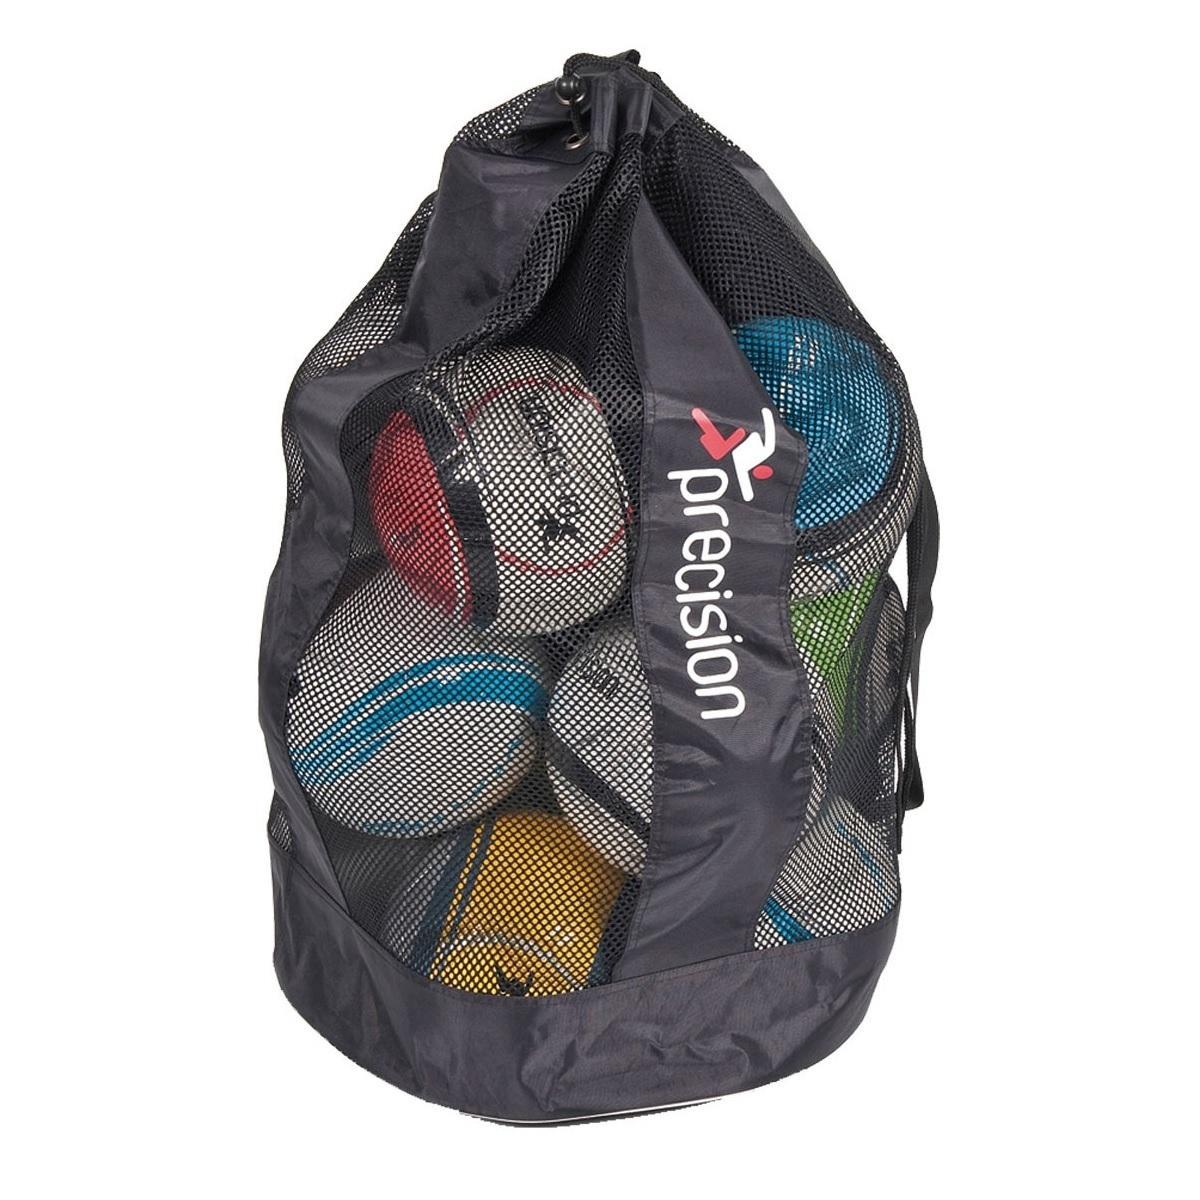 Precision 12 Ball Football Bag (Black) (One Size)